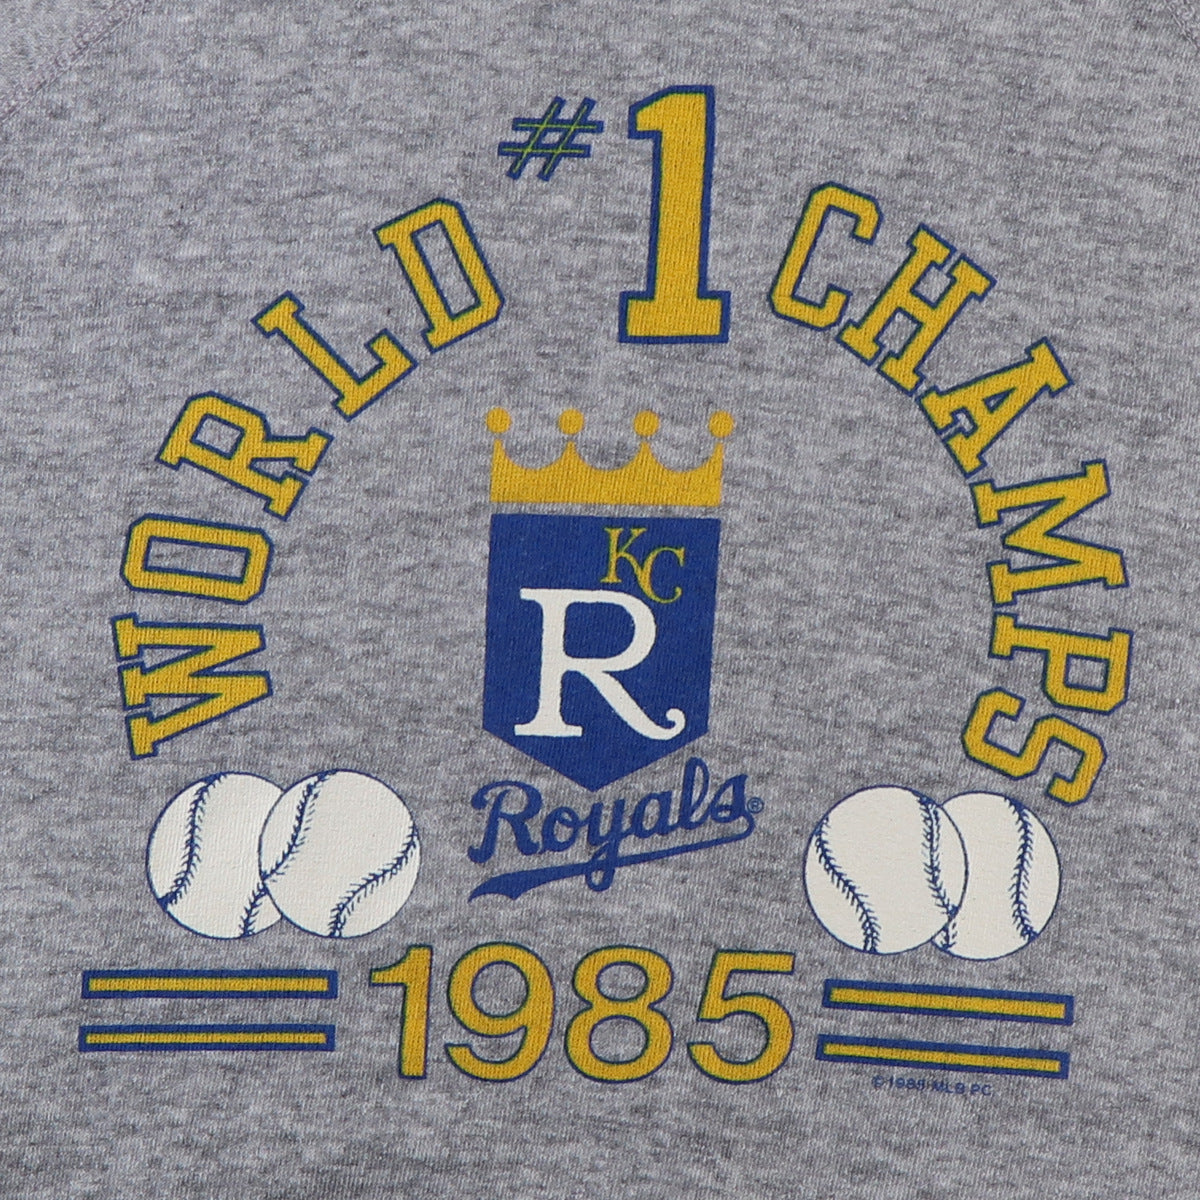 Vintage 1985 KANSAS CITY ROYALS World Series Champions T-Shirt